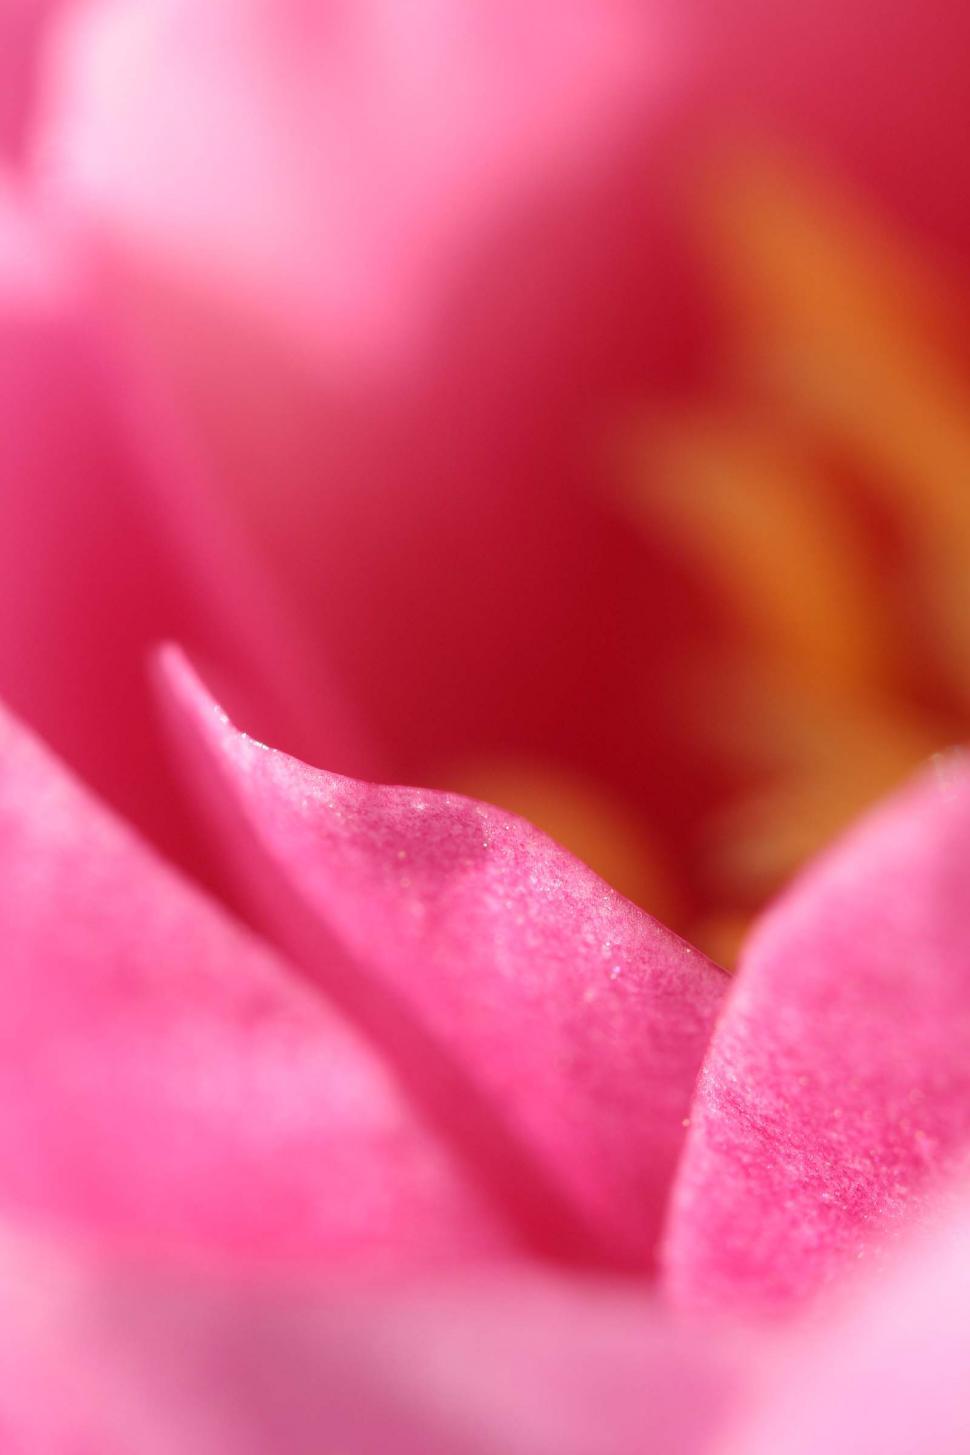 Free Image of Pink Petals 